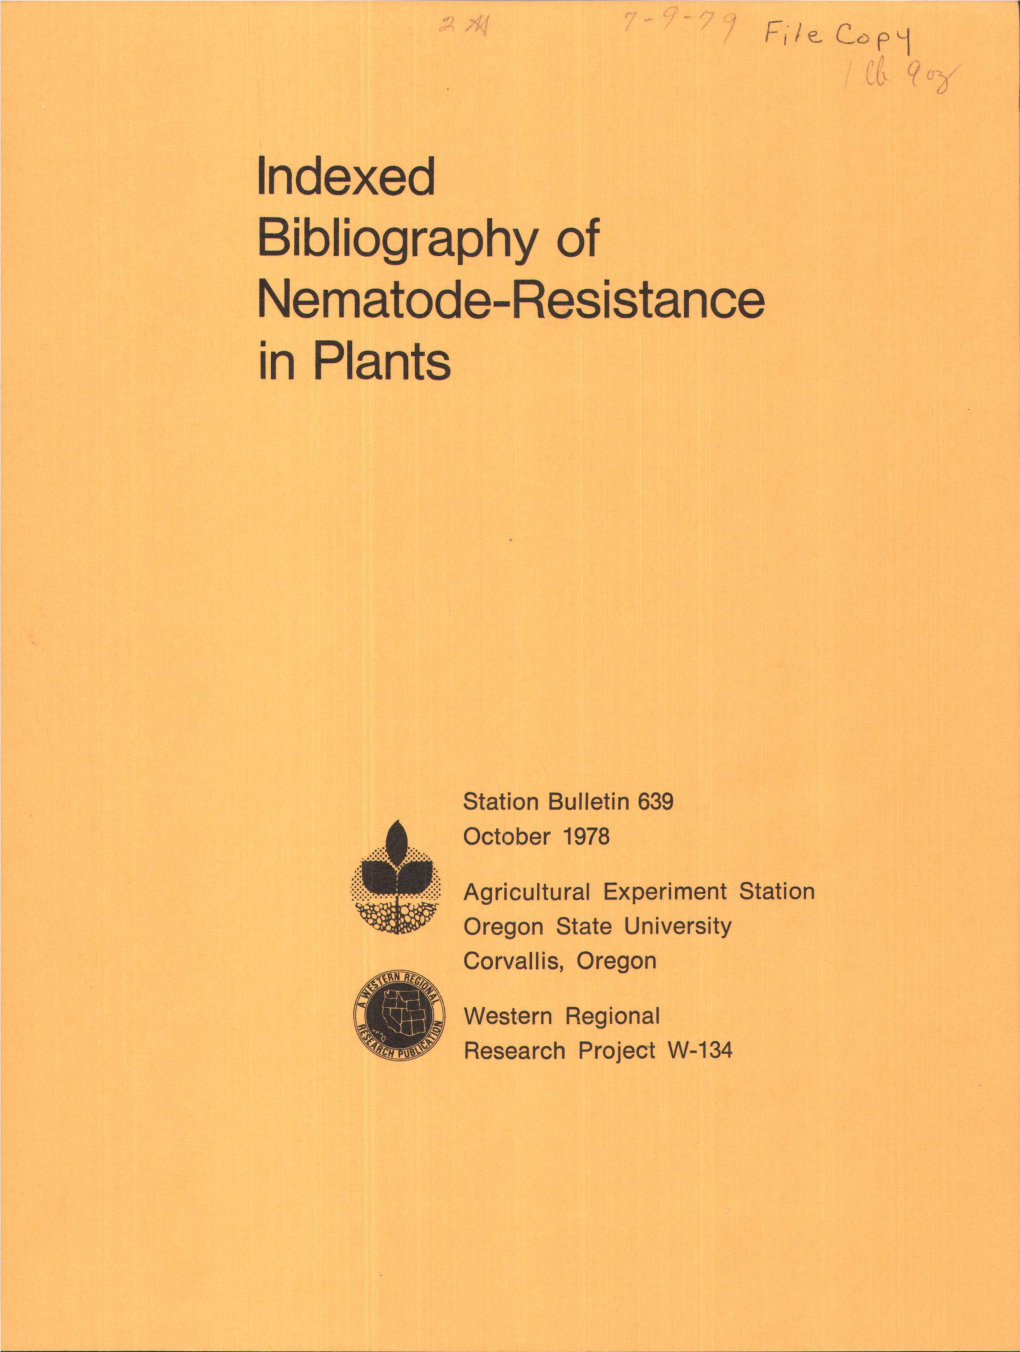 Bibliography of Nematode-Resistance in Plants